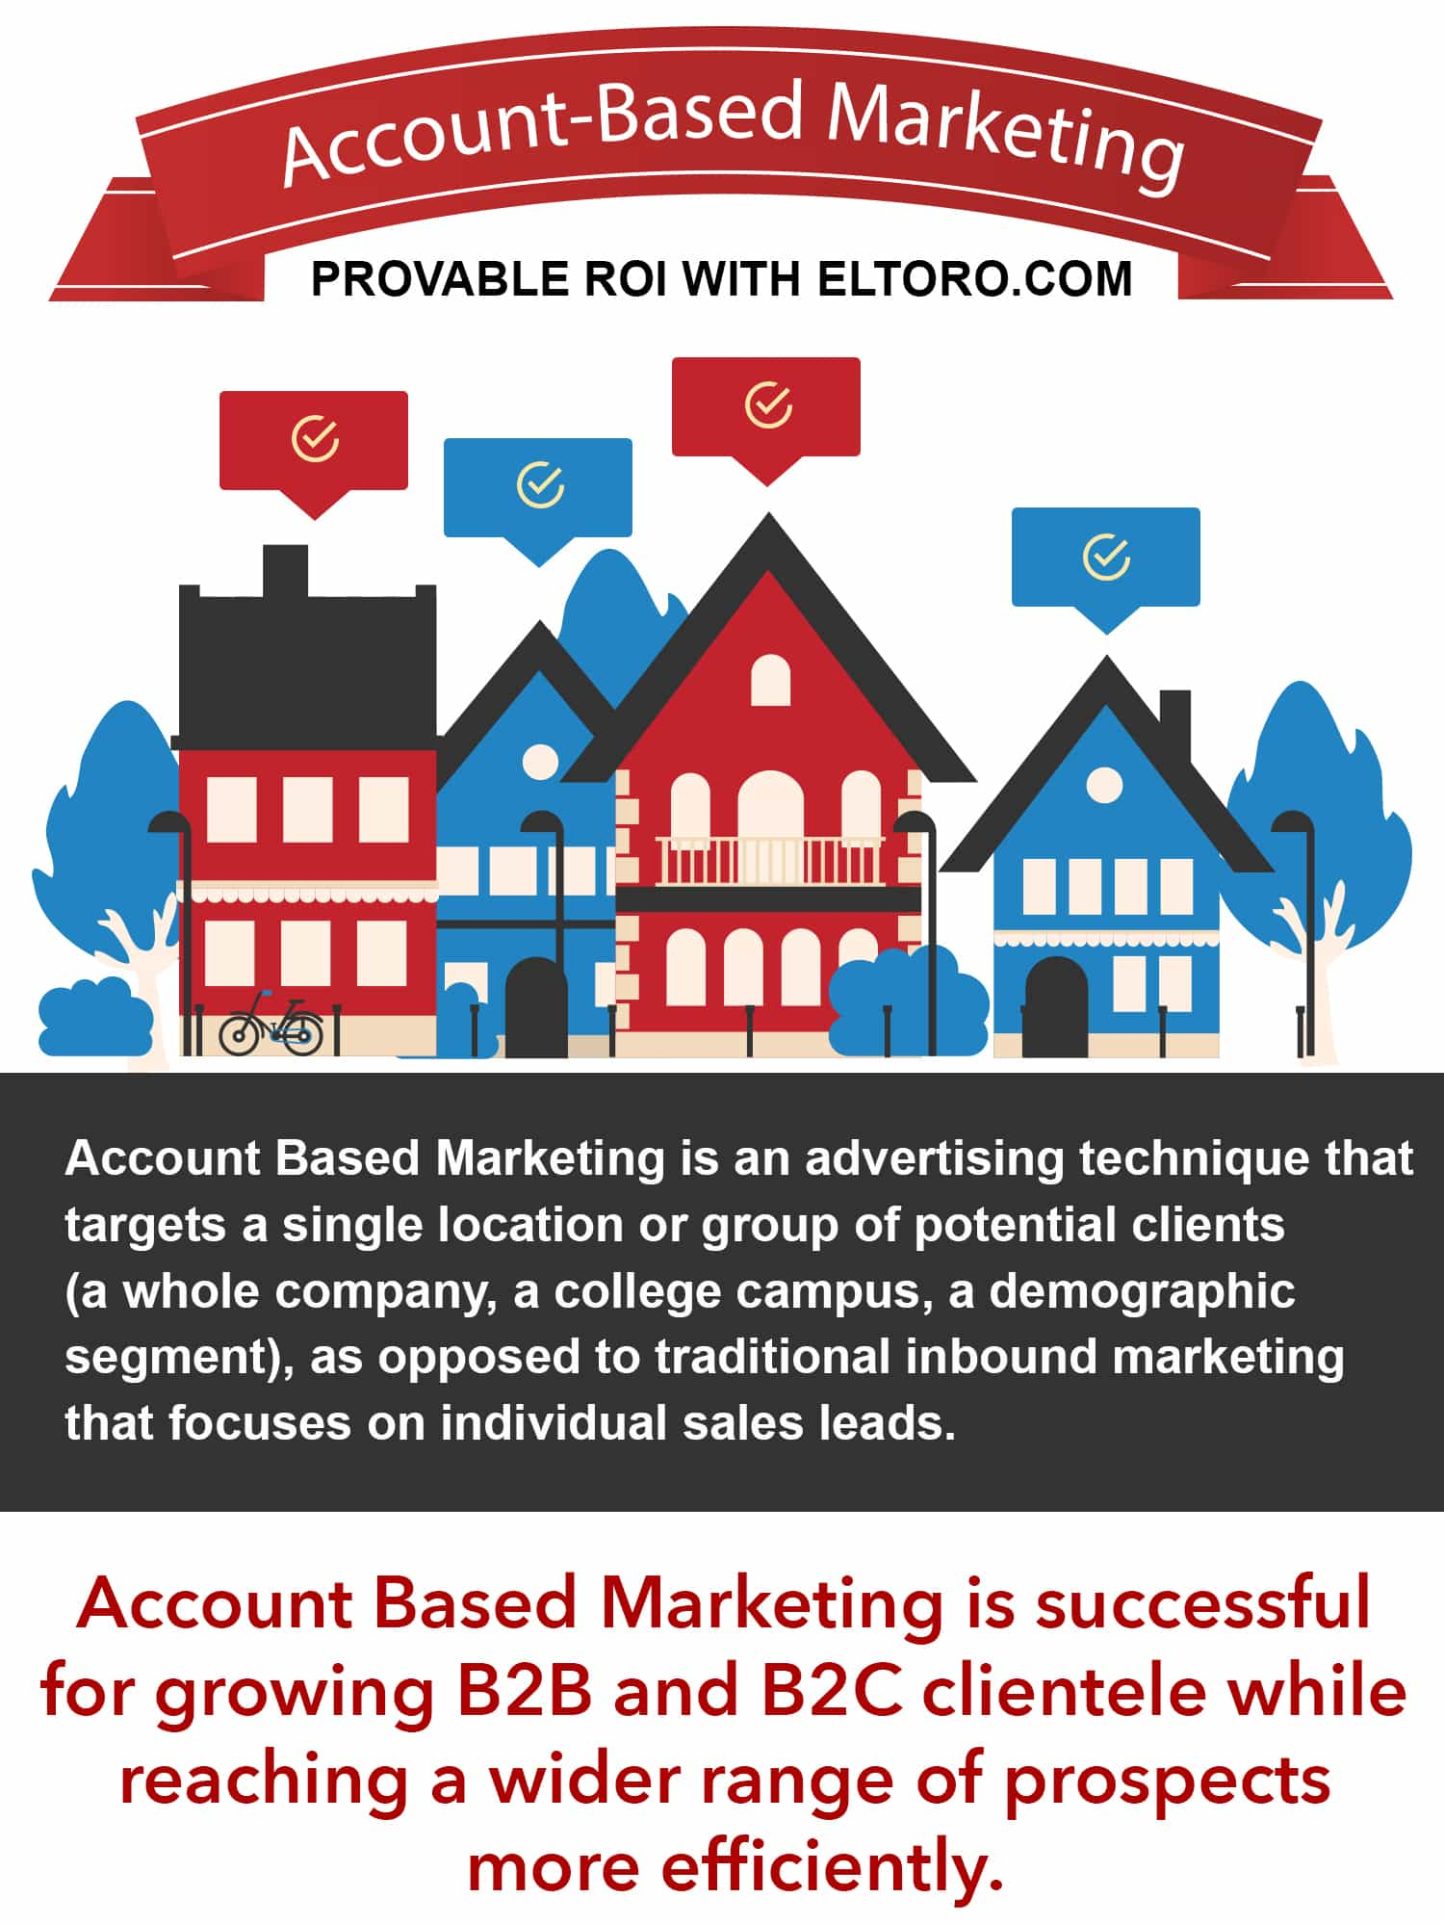 ElToro – Account Based Marketing